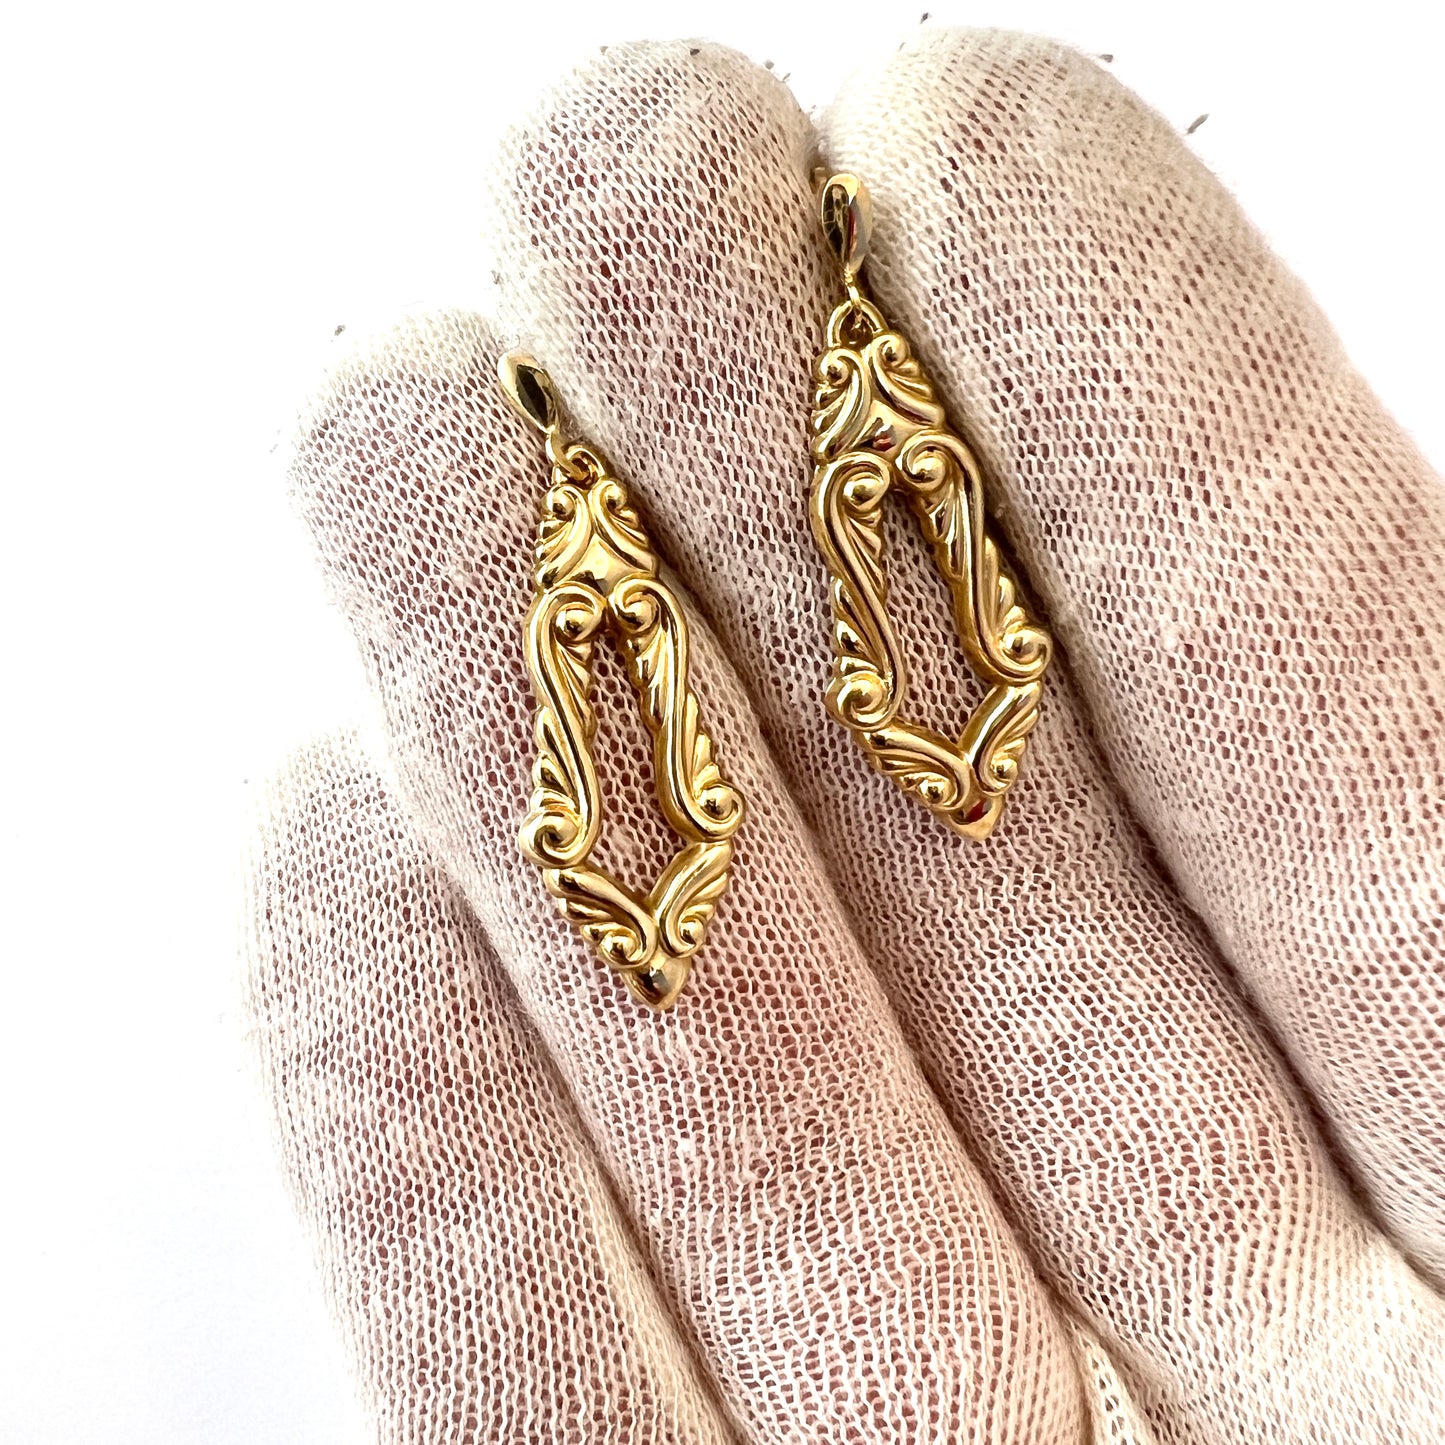 Vintage 18k Gold Earrings.